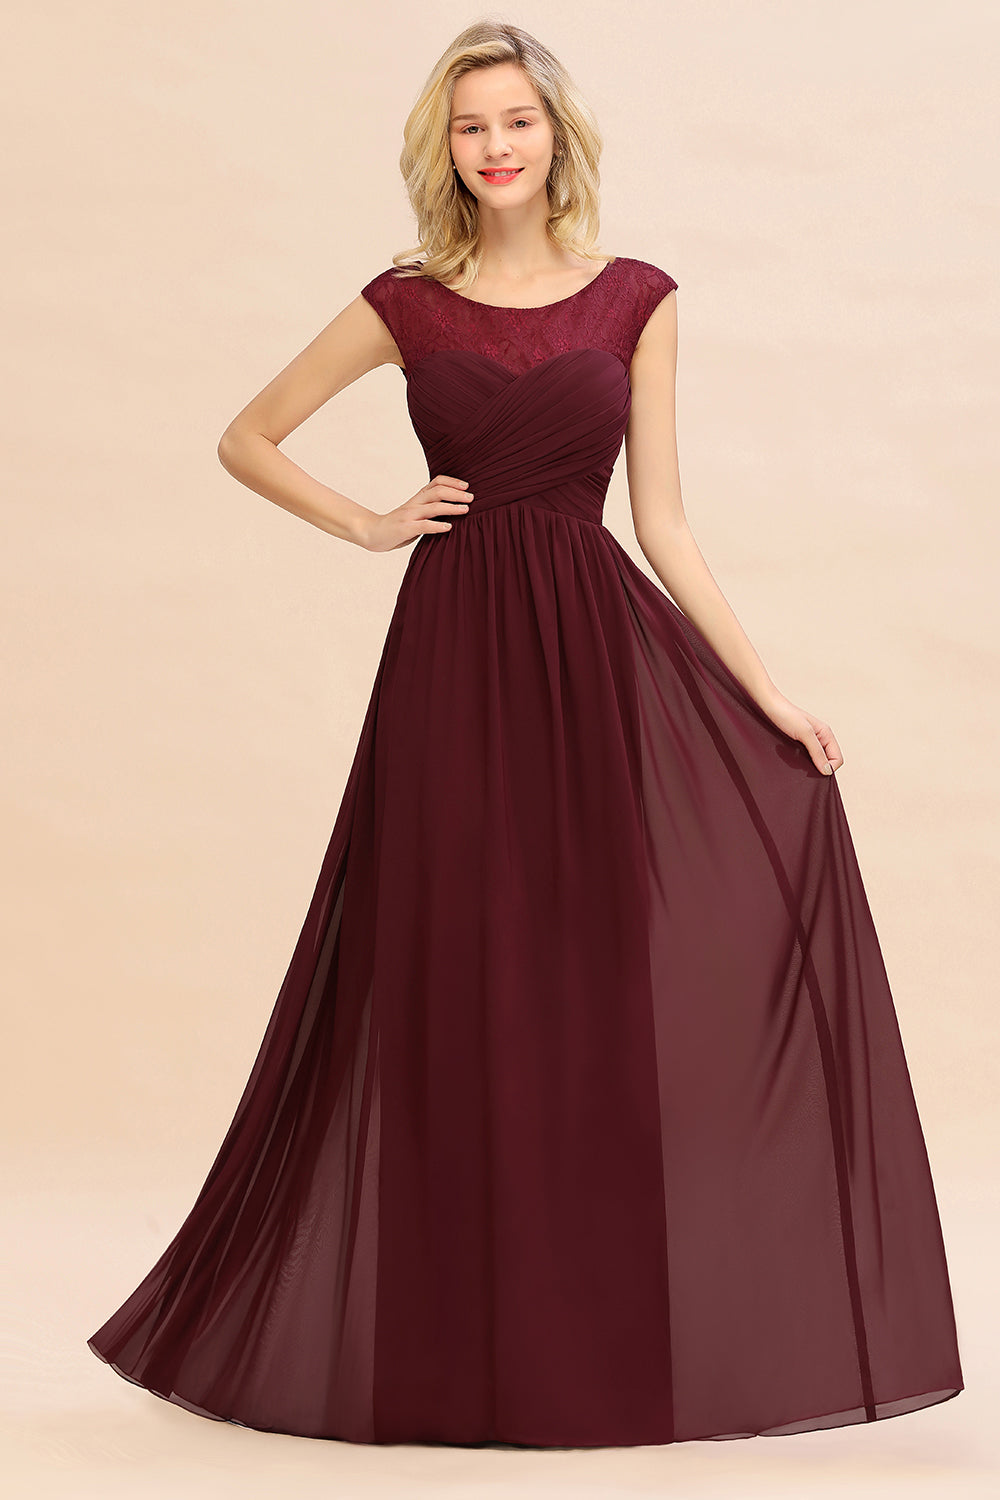 Modest Burgundy Chiffon Sleeveless Ruffle Bridesmaid Dress Affordable-27dress